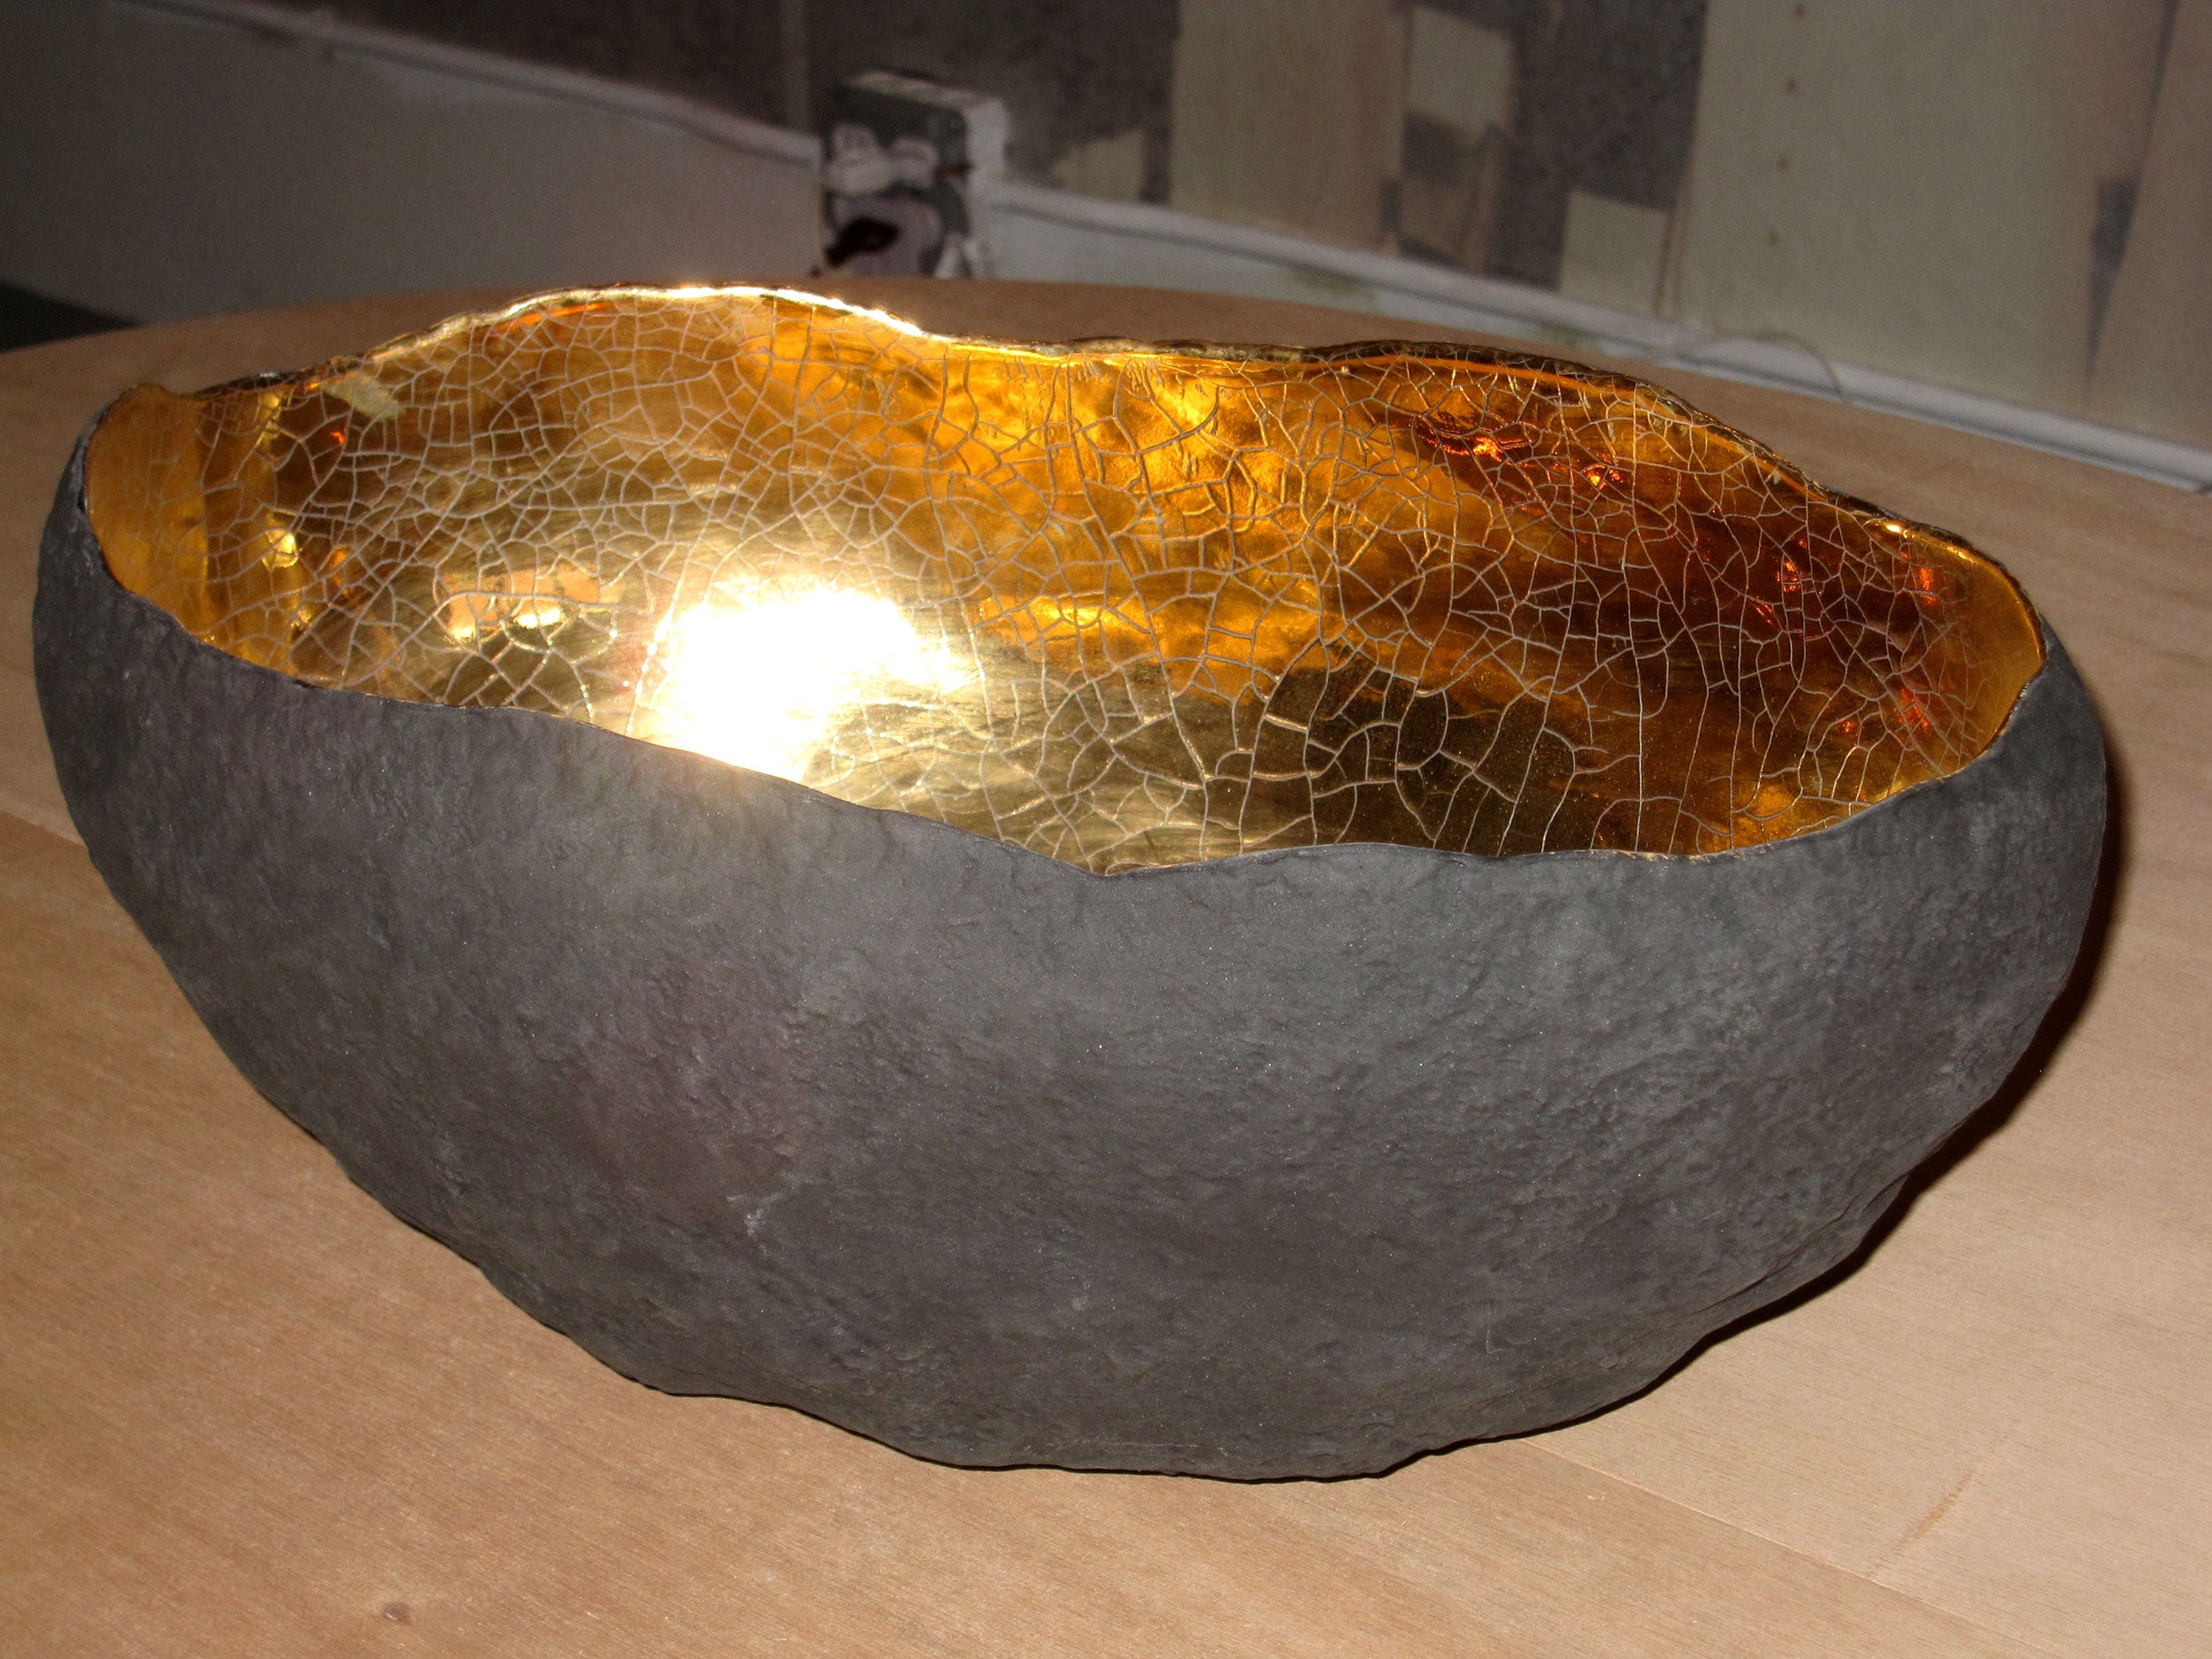 Oval vessel with Gold by Cristina Salusti